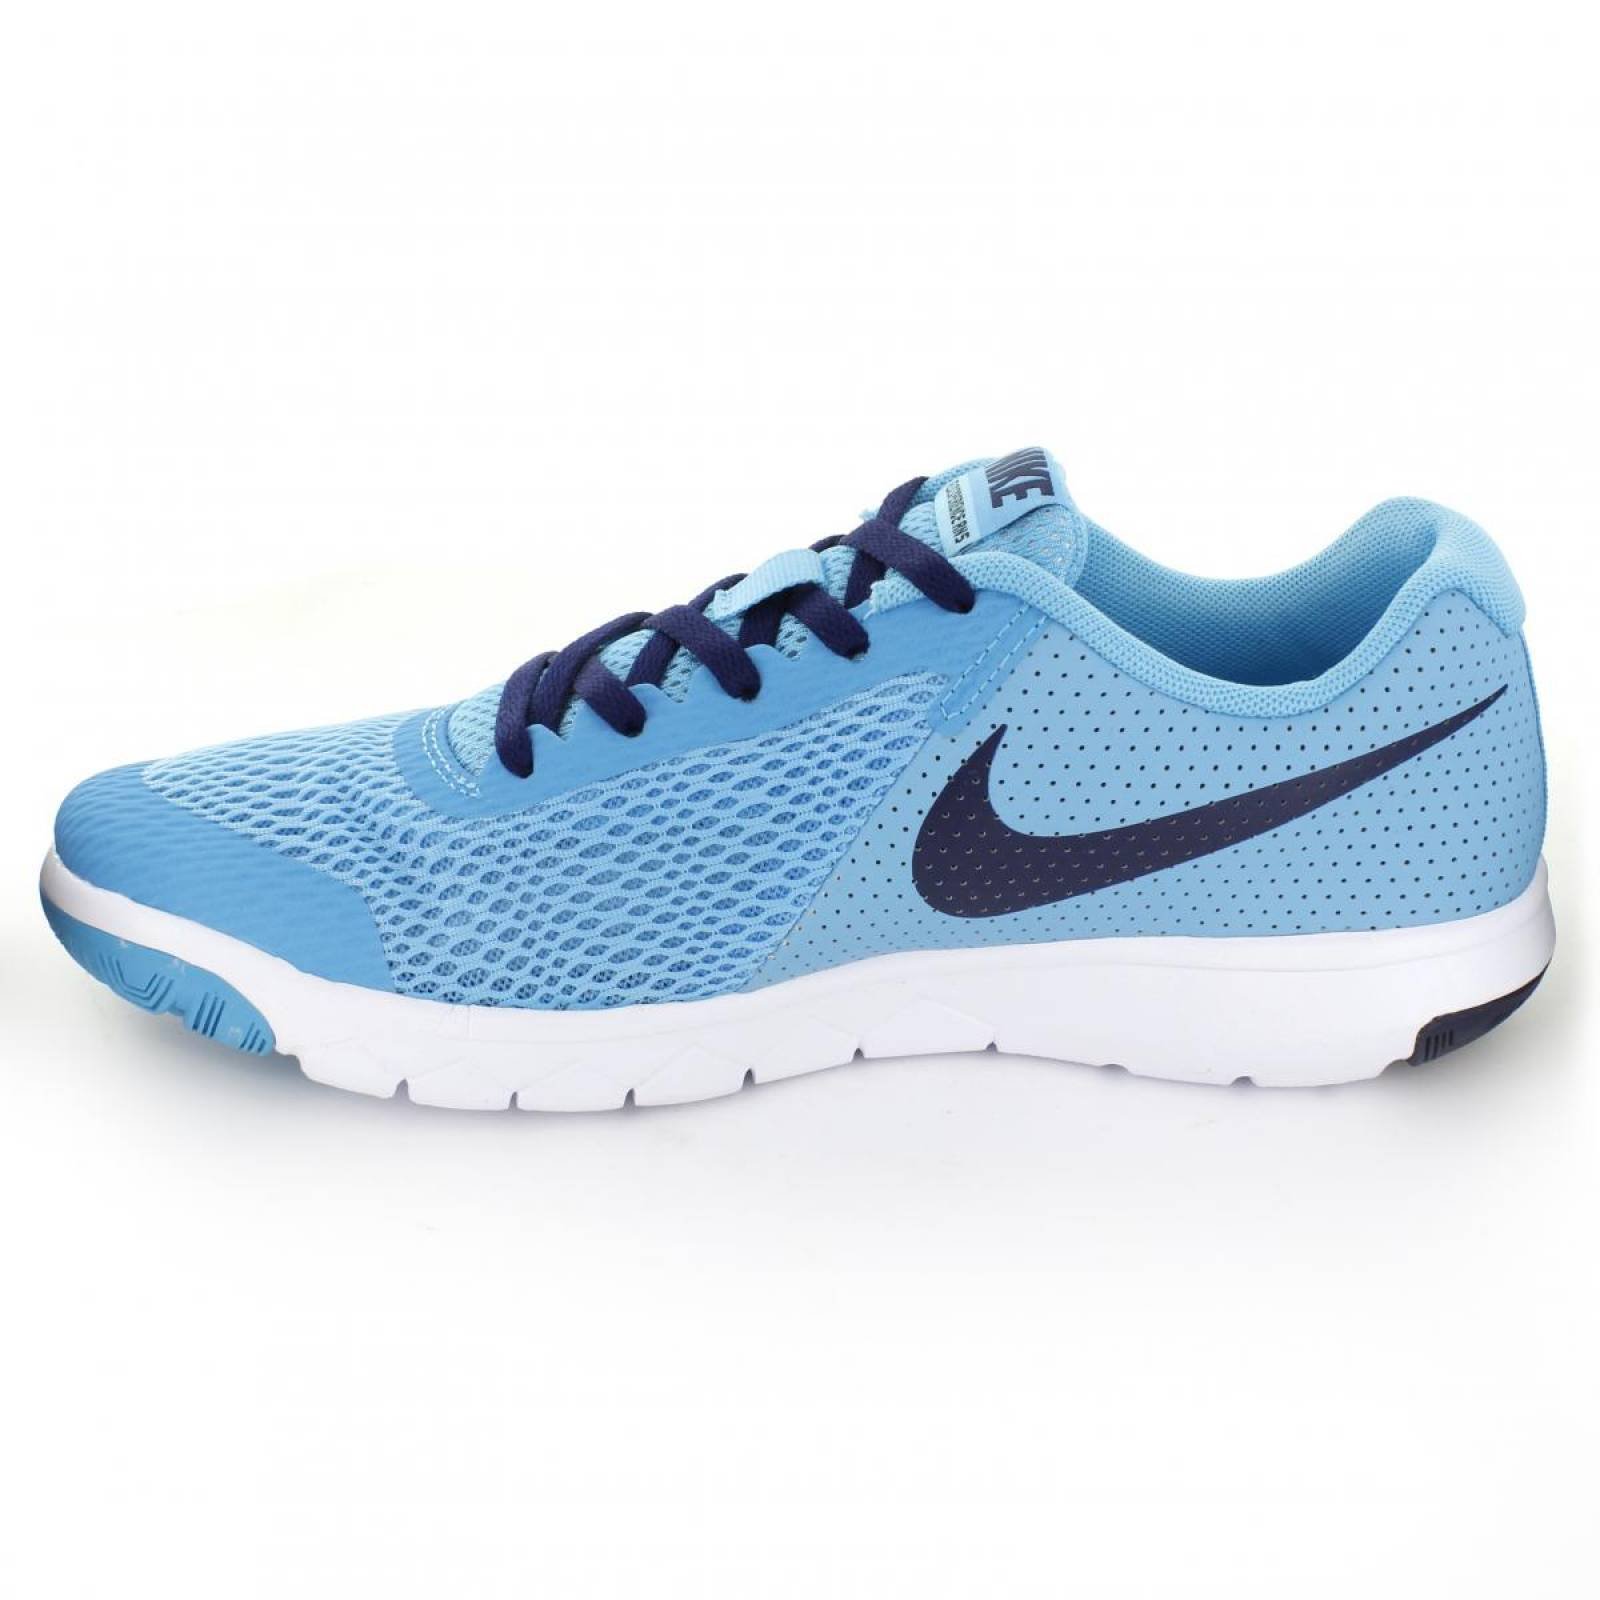 Tenis para Mujer Nike 844995 403 043068 Color Celeste azul